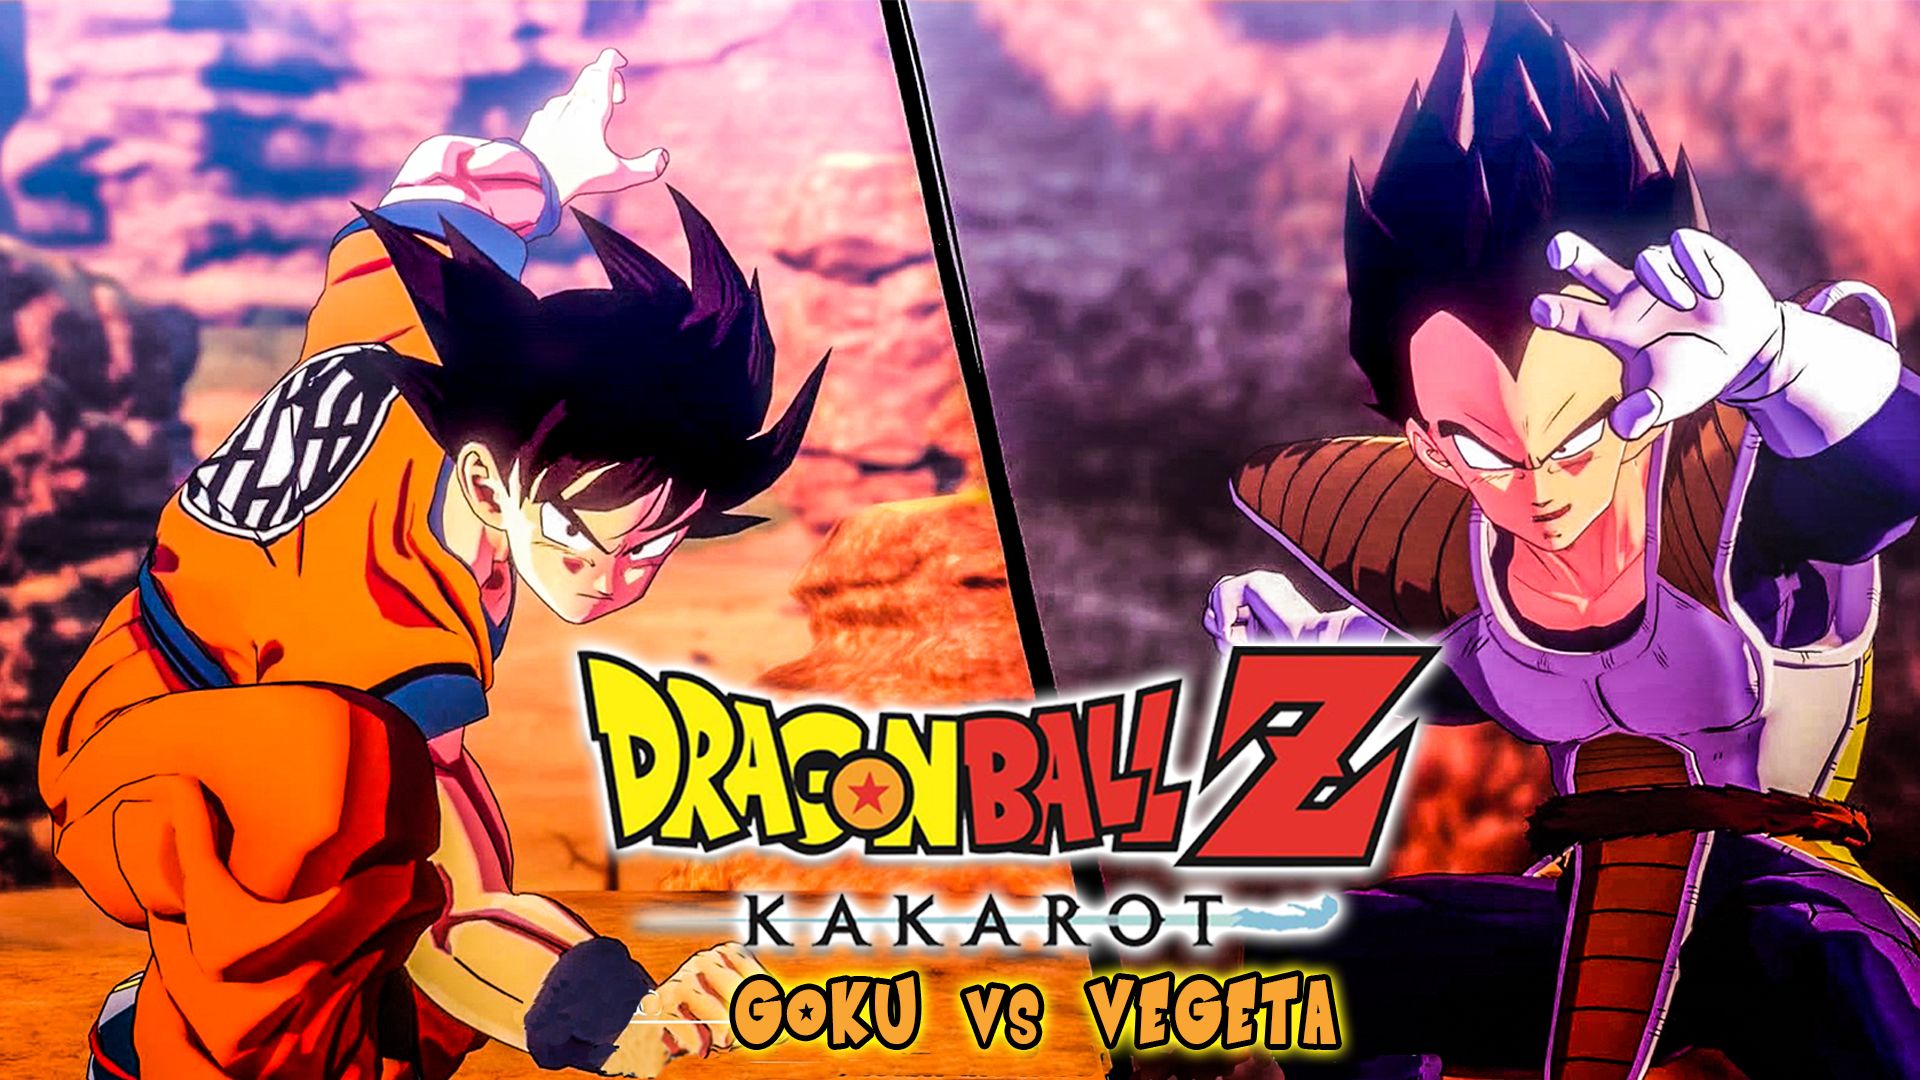 Watch Clip: Dragon Ball Z Kakarot Gameplay Pt. 2 vs Vegeta